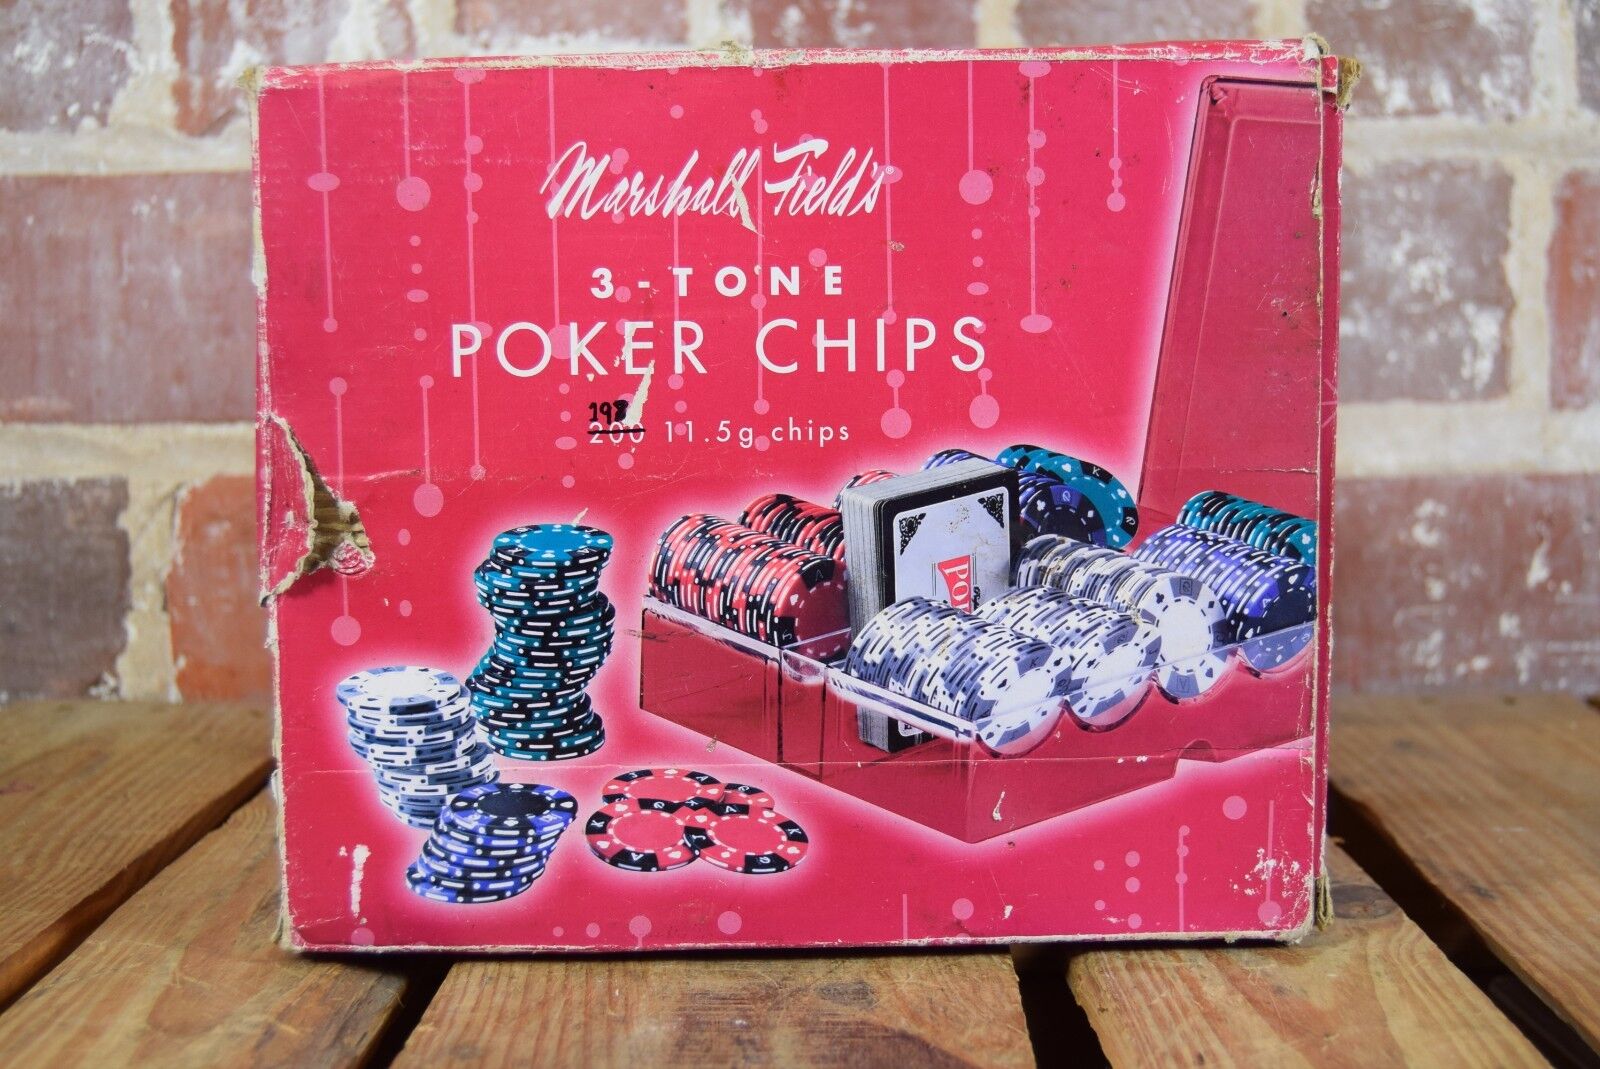 2005 Marshall Field 3-tone Poker Chip Set